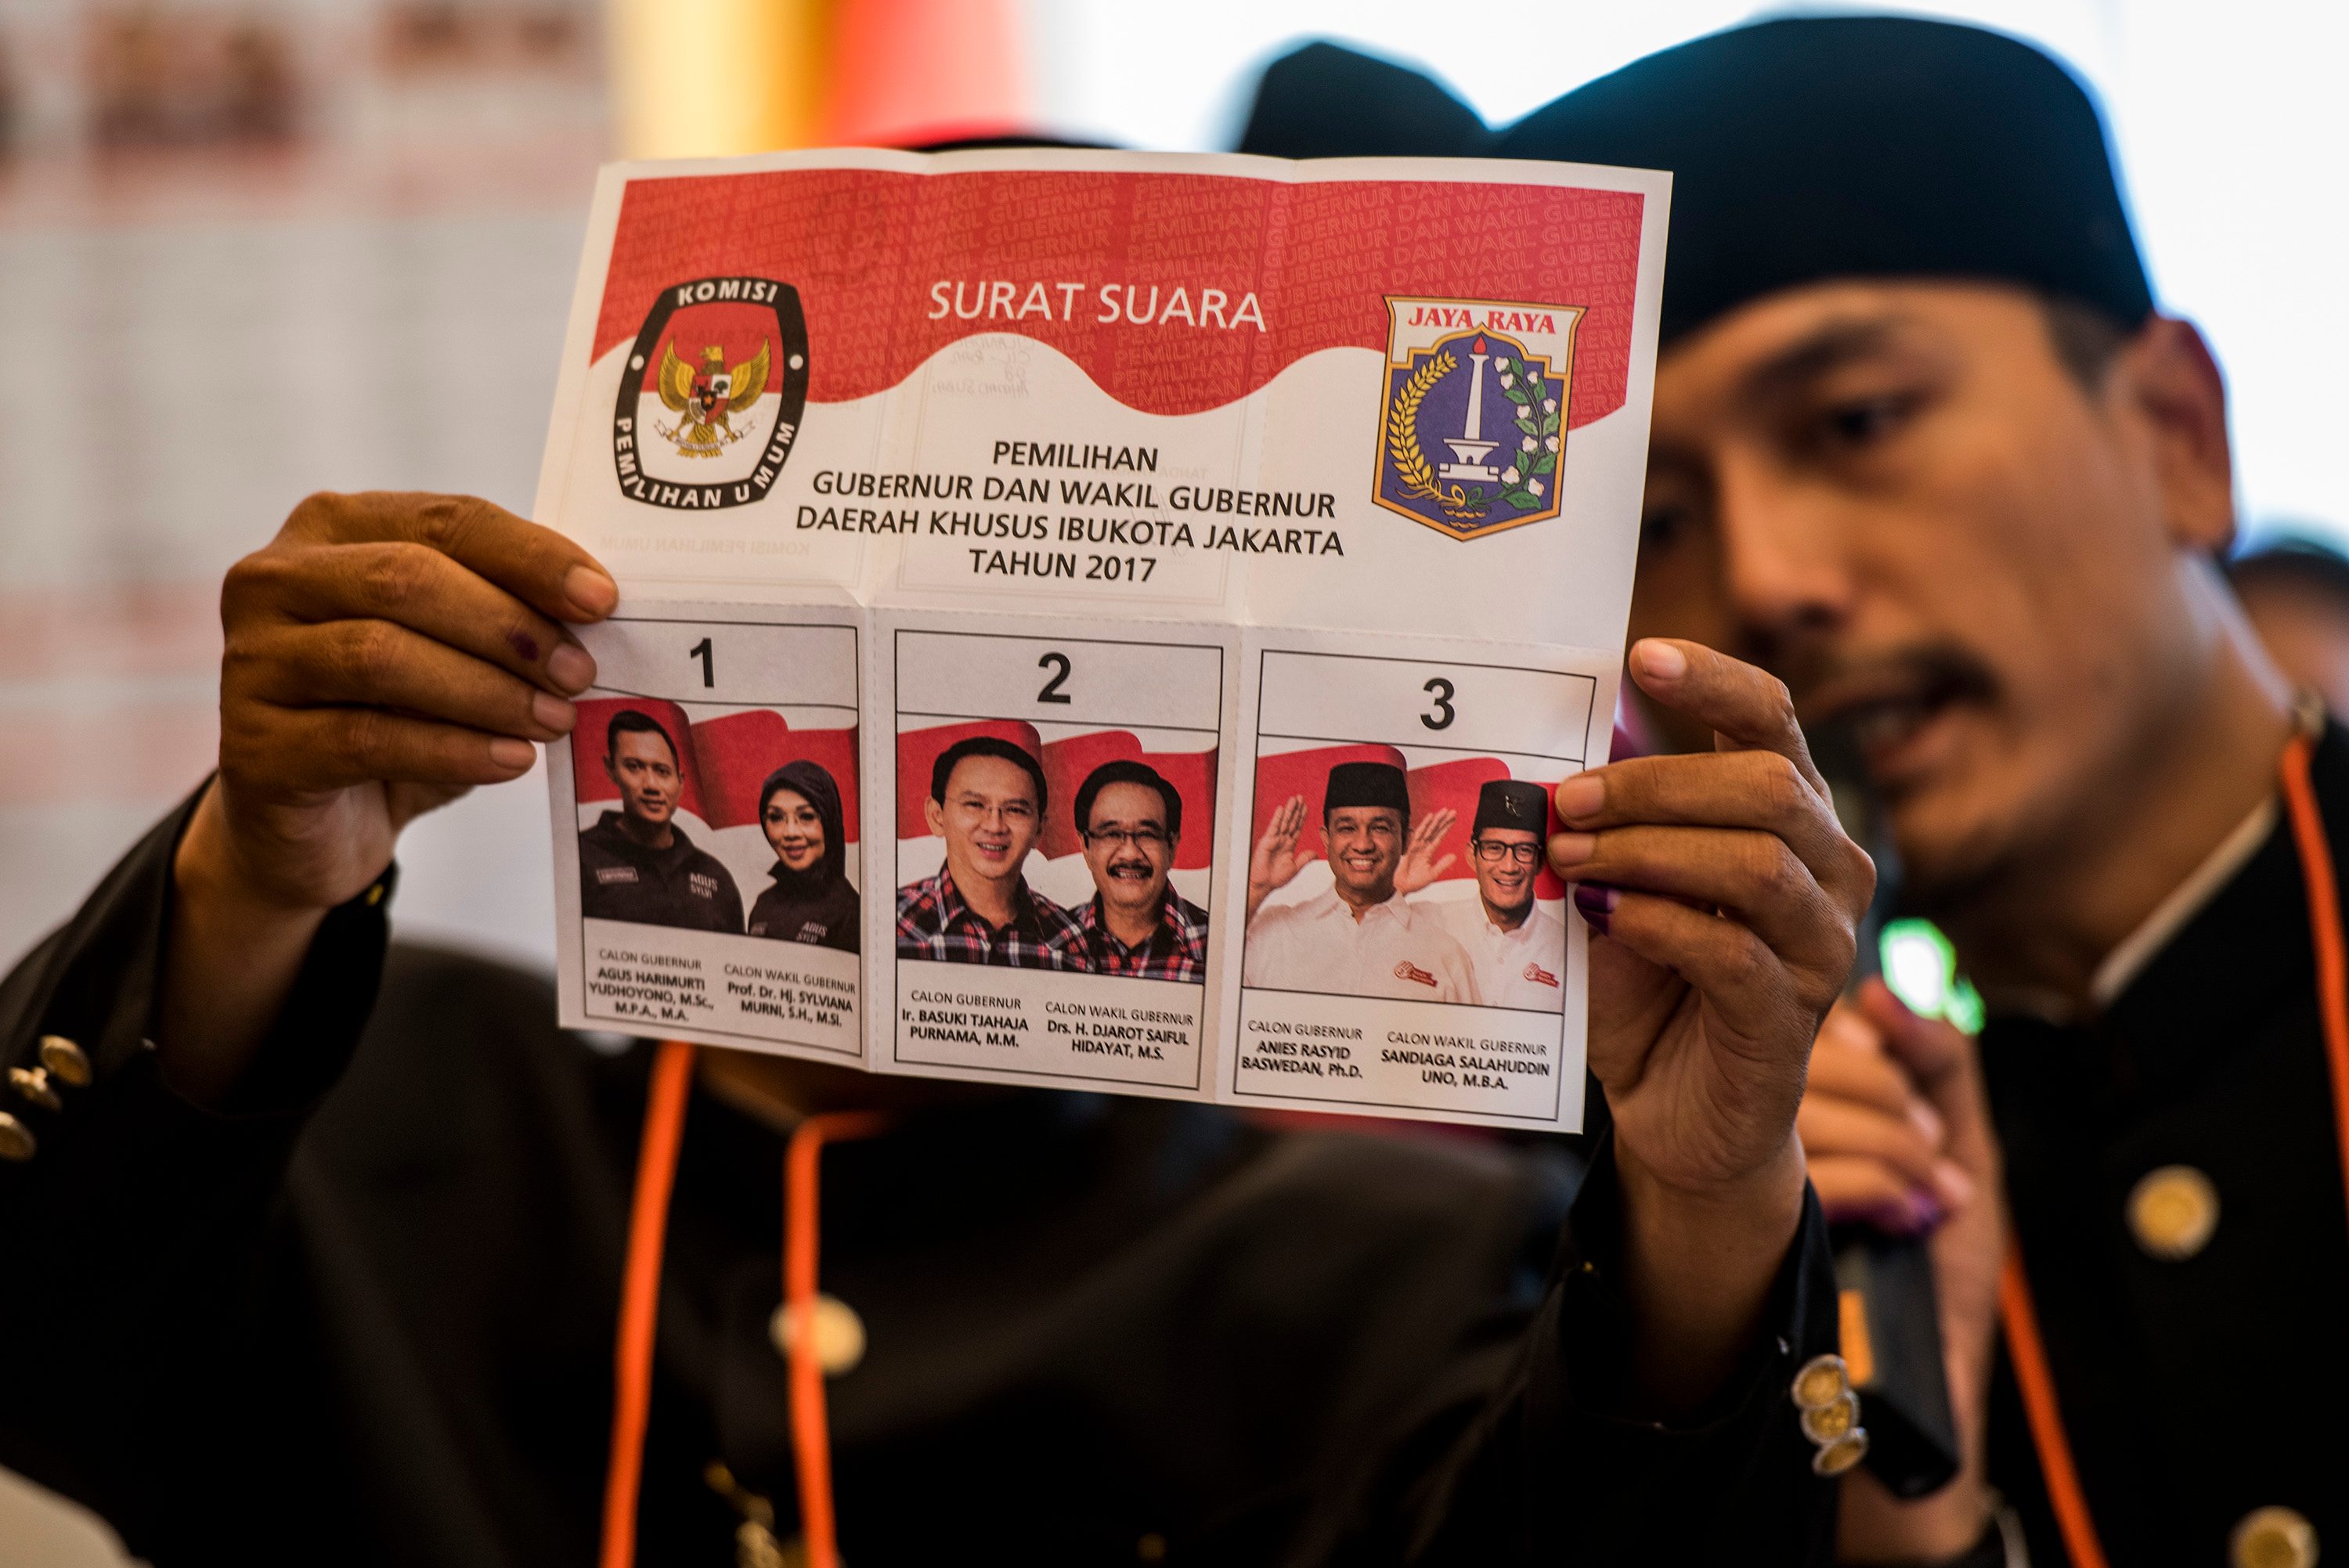 Petugas KPPS menunjukkan surat suara saat menghitung jumlah suara pada Pemilihan Gubernur DKI Jakarta di TPS 28 Cilandak Barat, Jakarta, pada 15 Februari 2017. Foto oleh M Agung Rajasa/Antara 